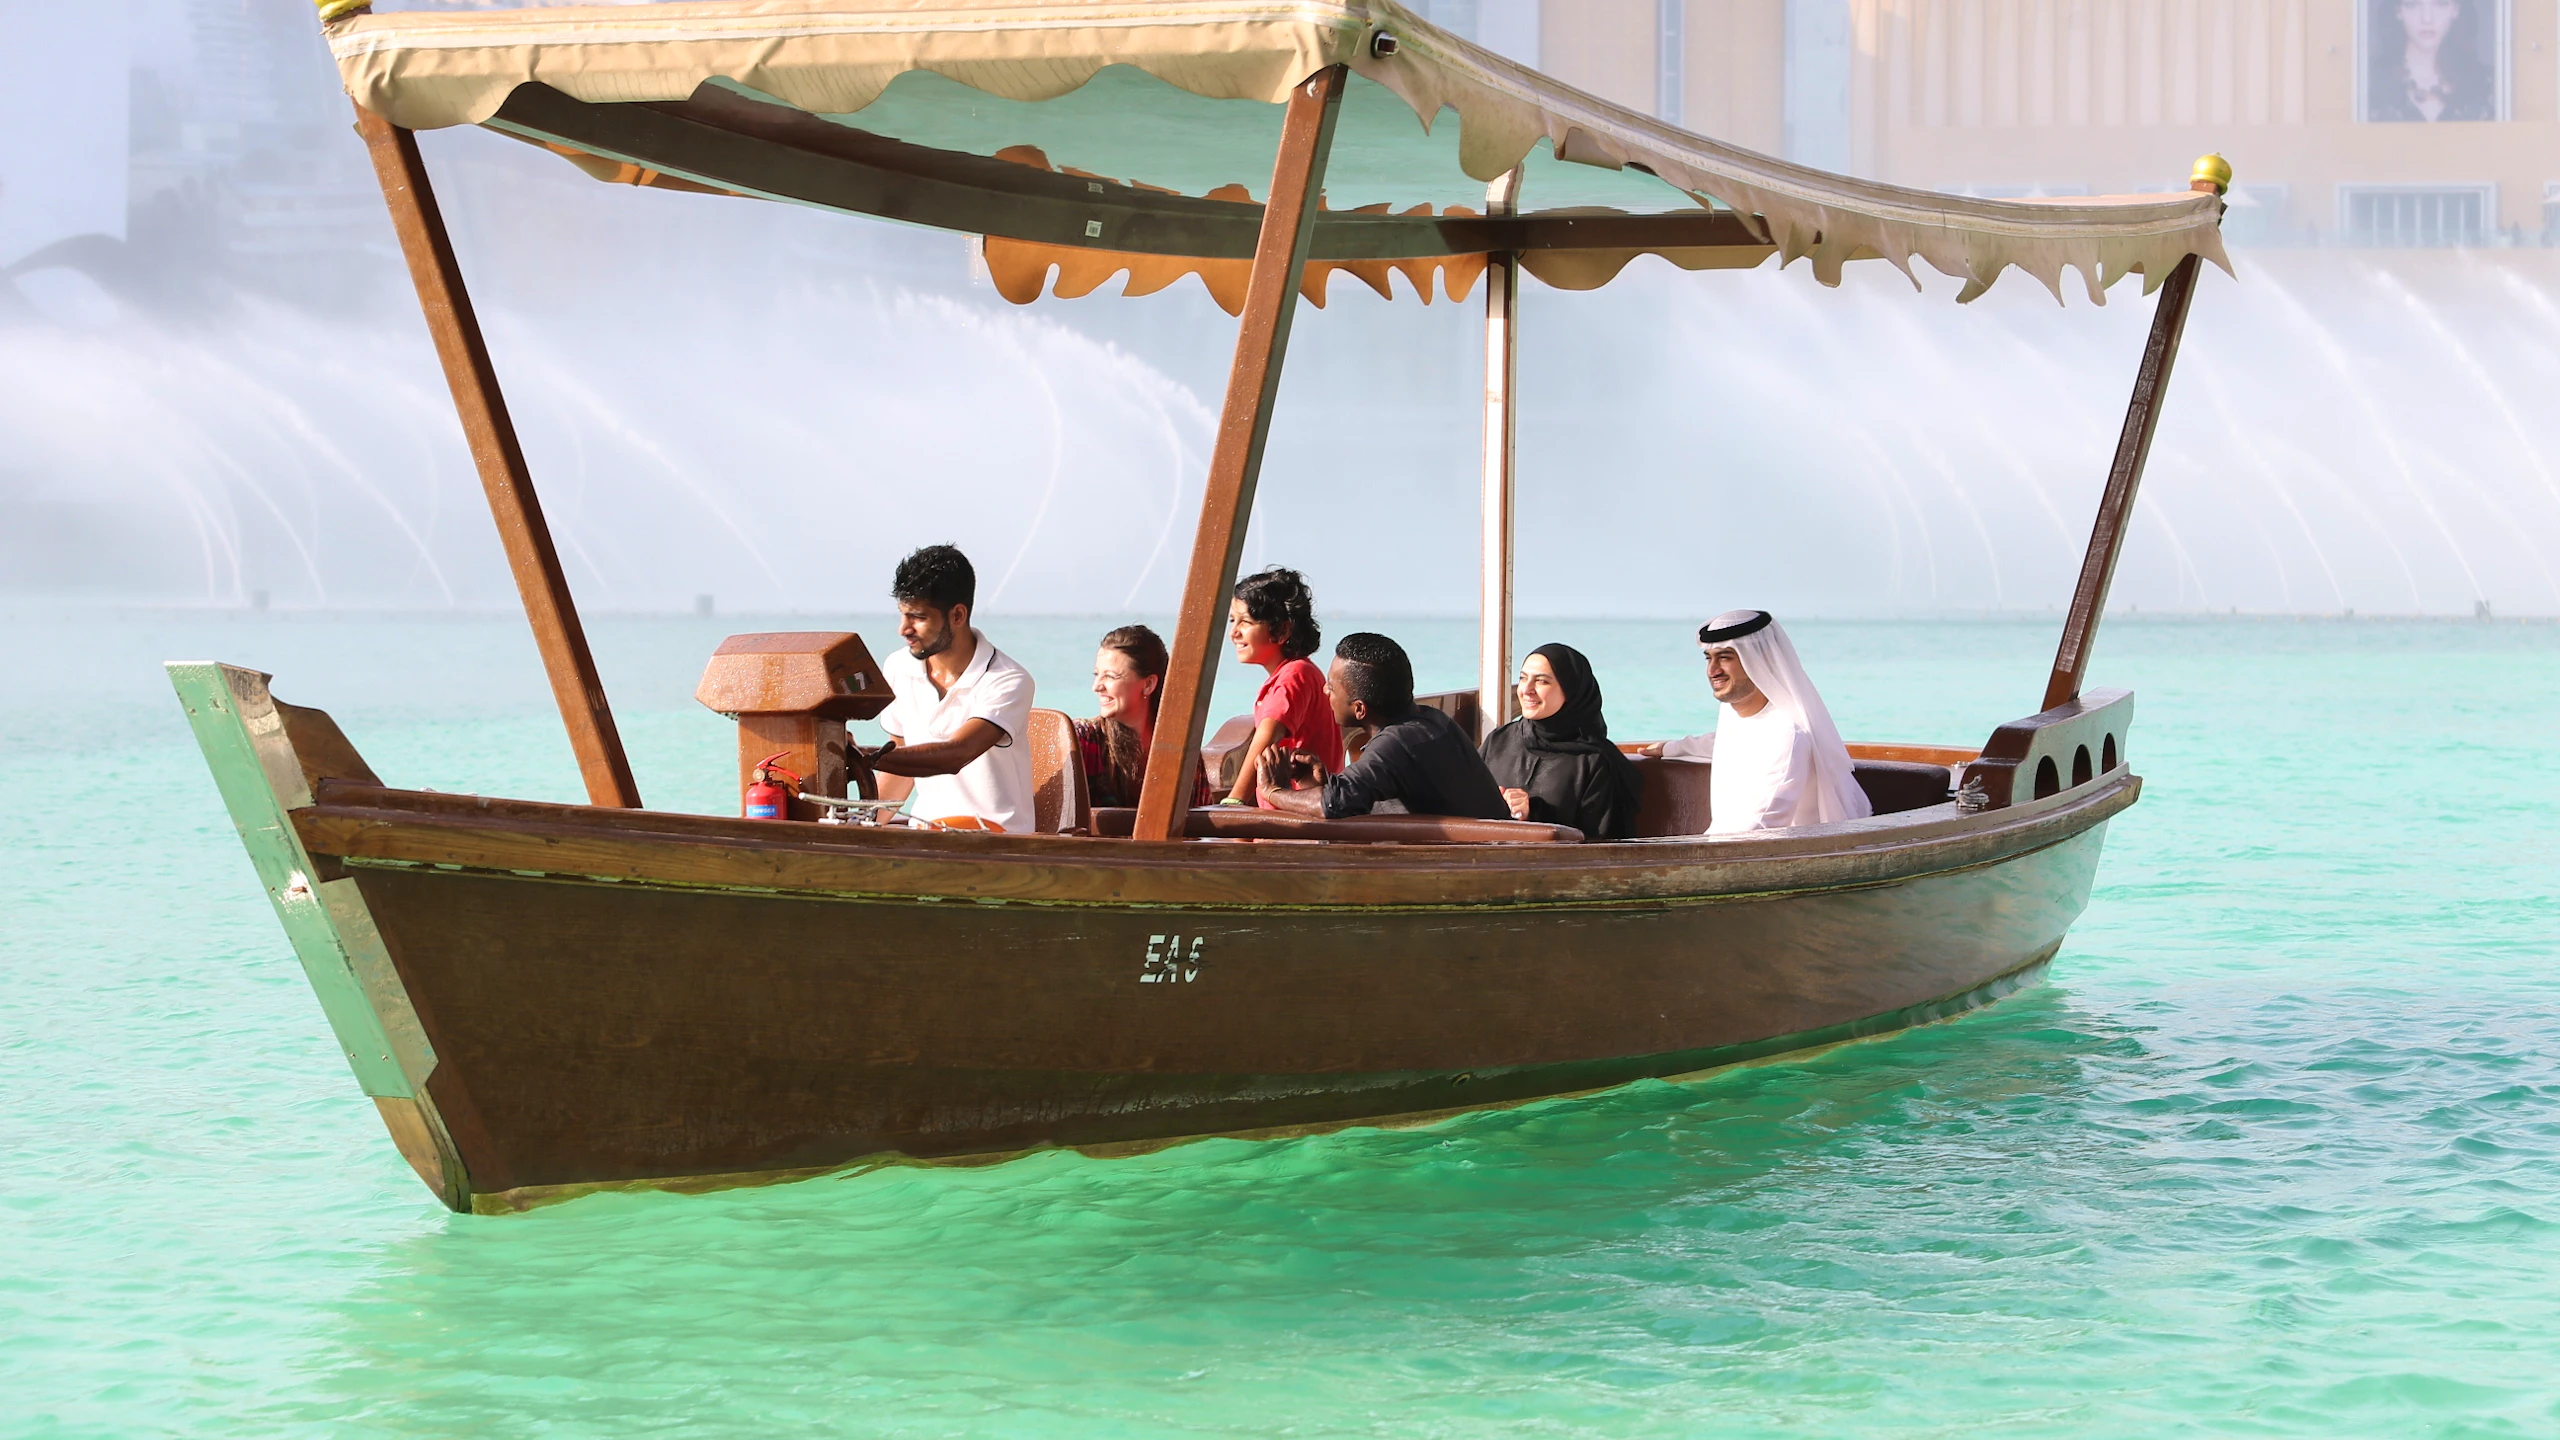 The Dubai Fountain Show and Lake Ride